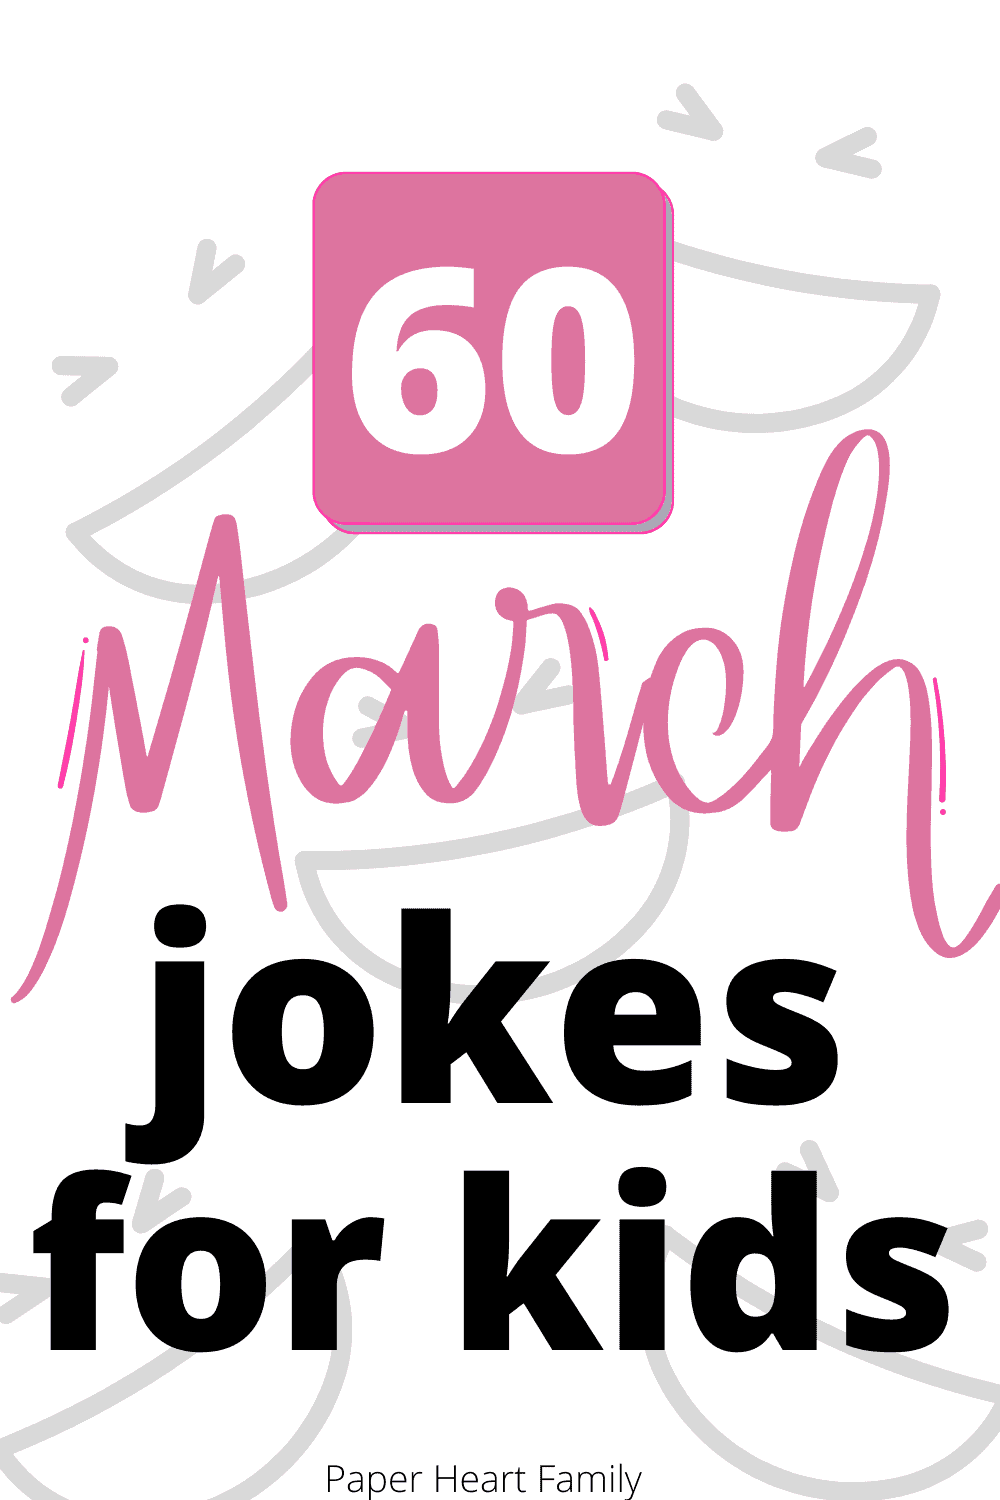 March Jokes For Kids